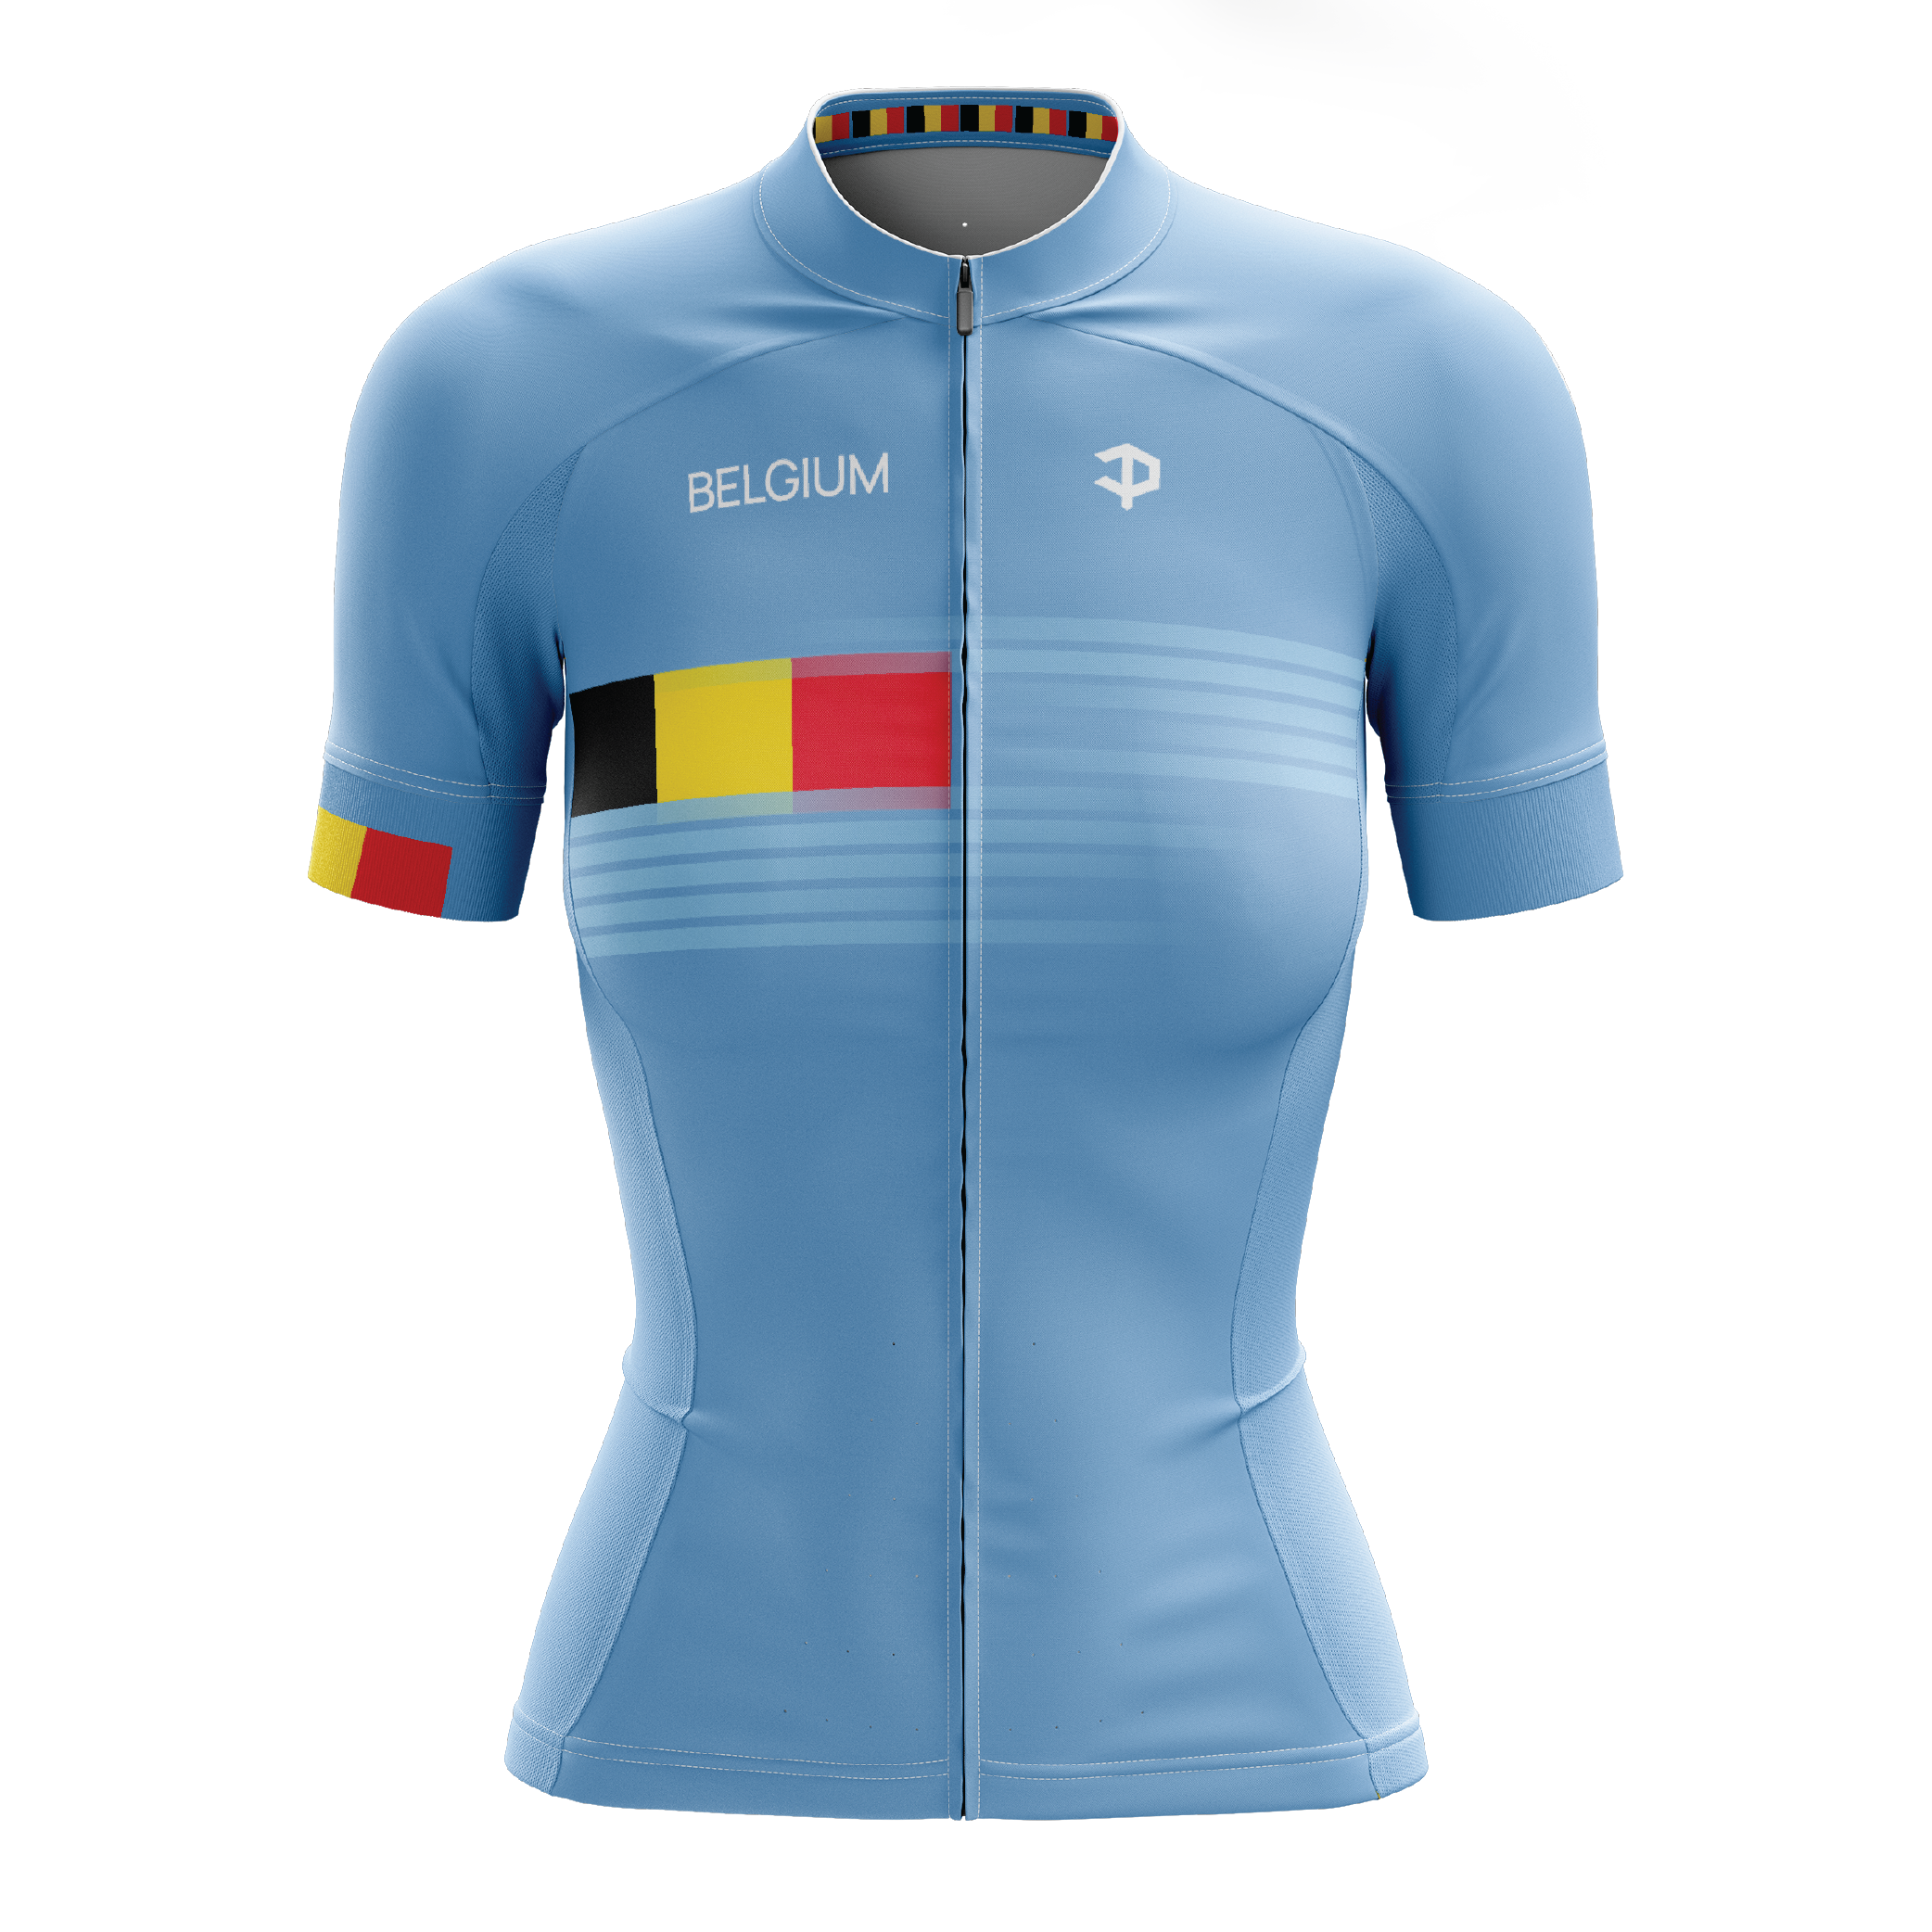 Belgium Short Sleeve Cycling Jersey